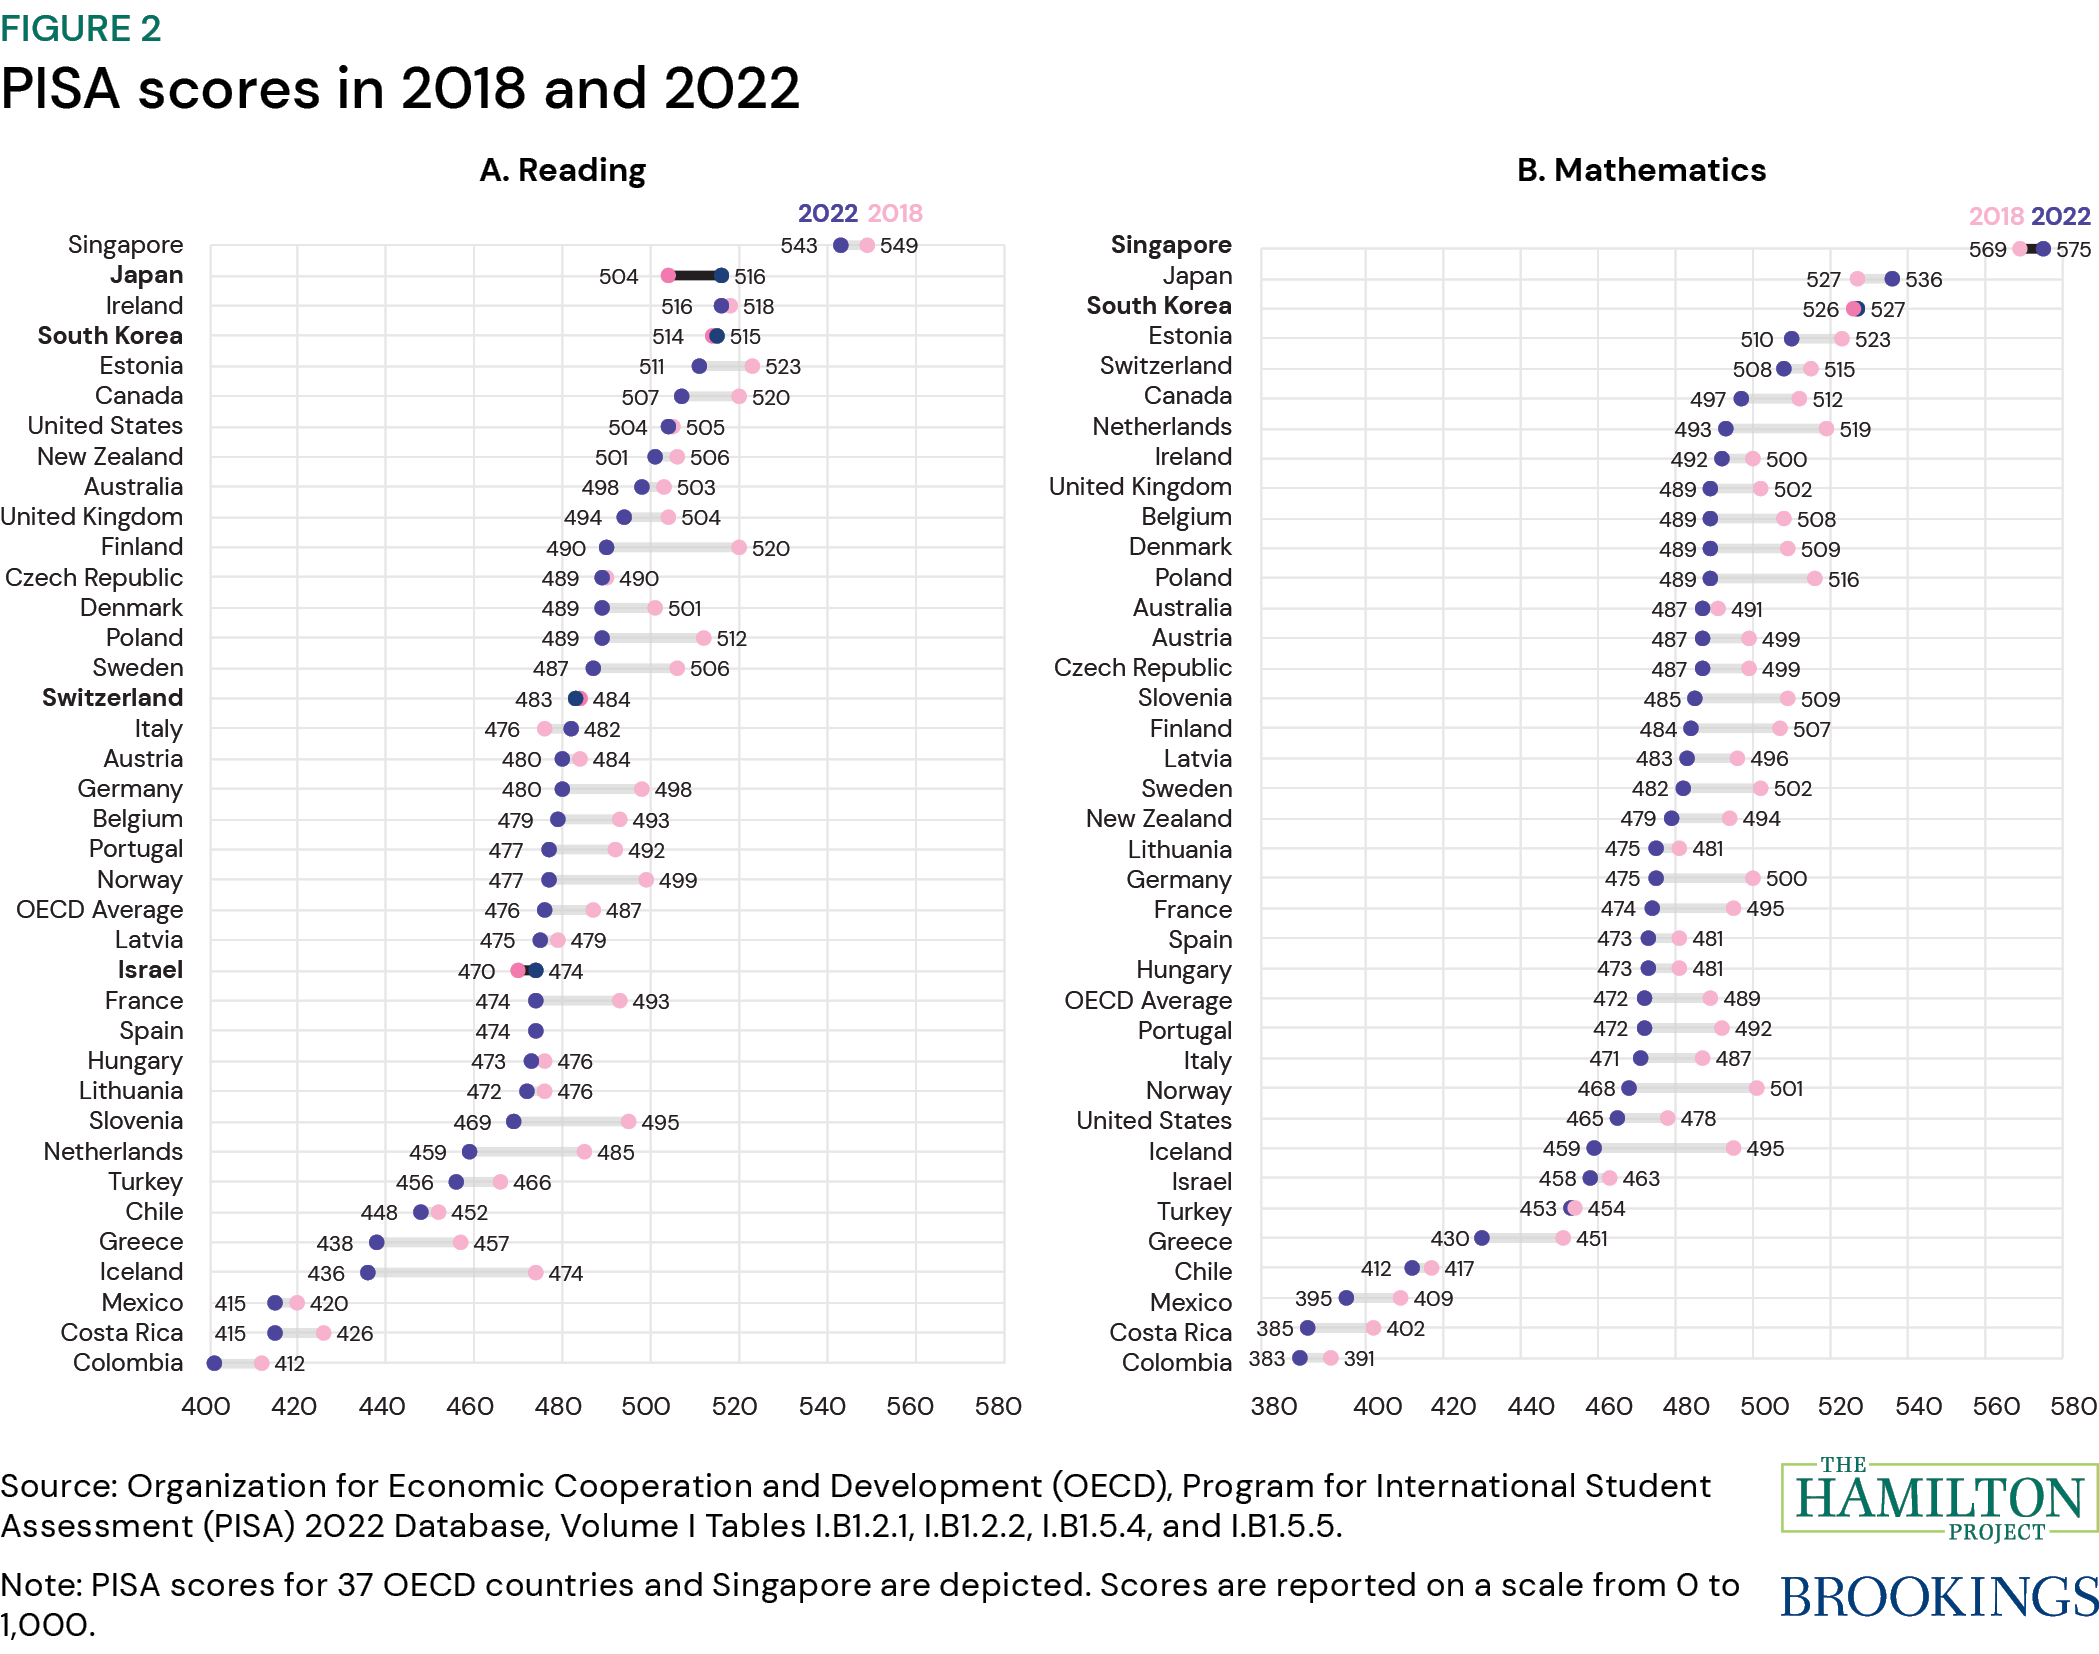 Figure 2: PISA scores in 2018 and 2022